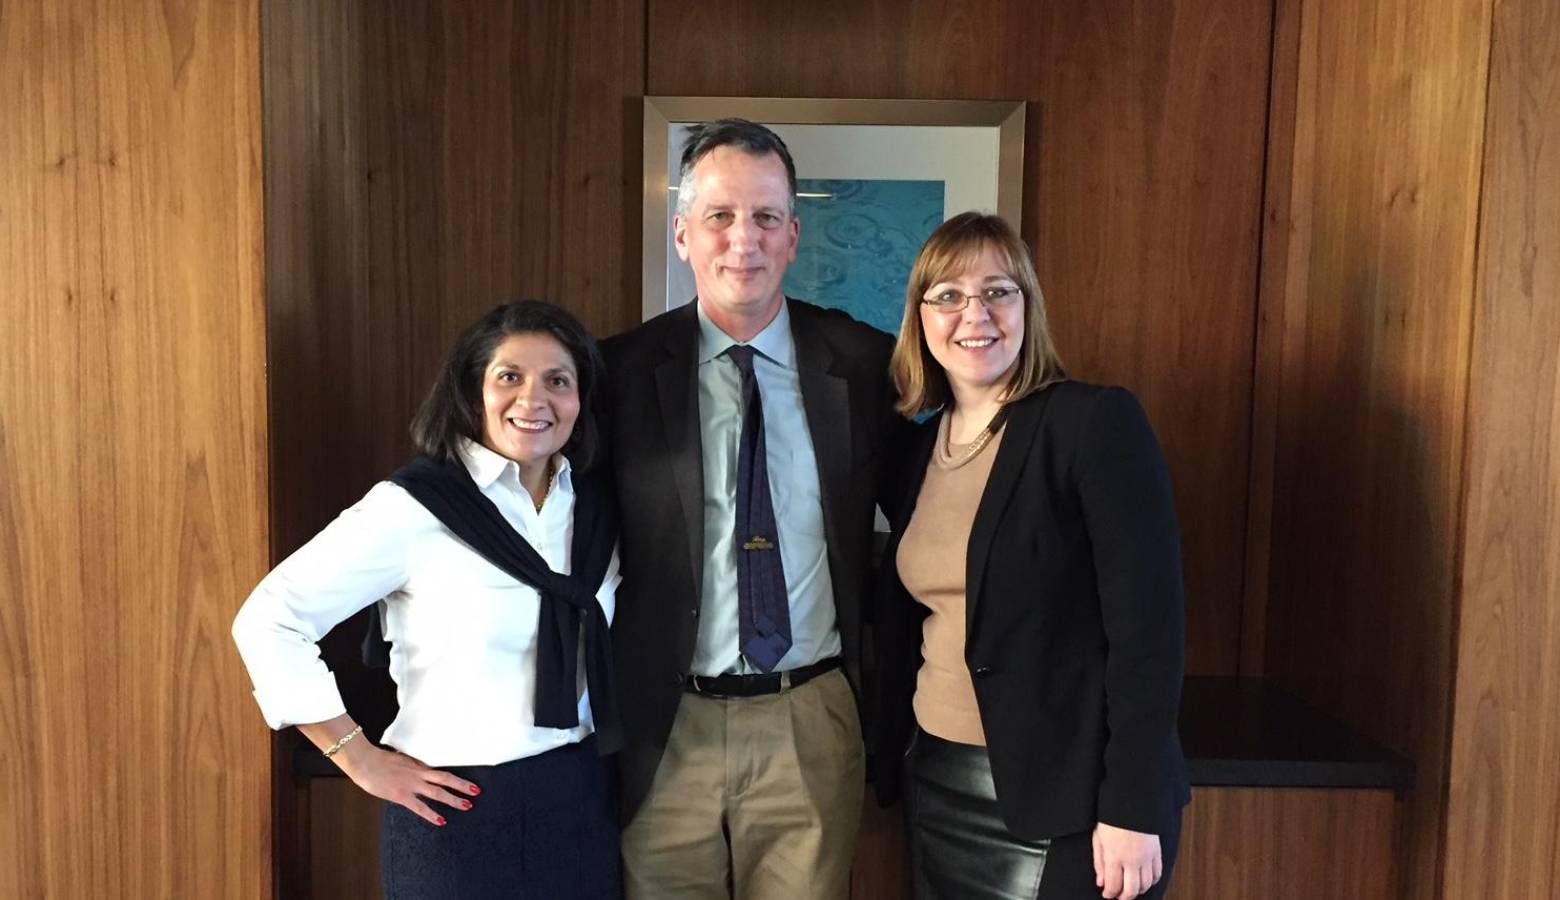 Dr. Maria Carrillo, Dr. Bruce Lamb and Dr. Liana Apostolova investigators with the LEADS trial. (Jill Sheridan/IPB News)